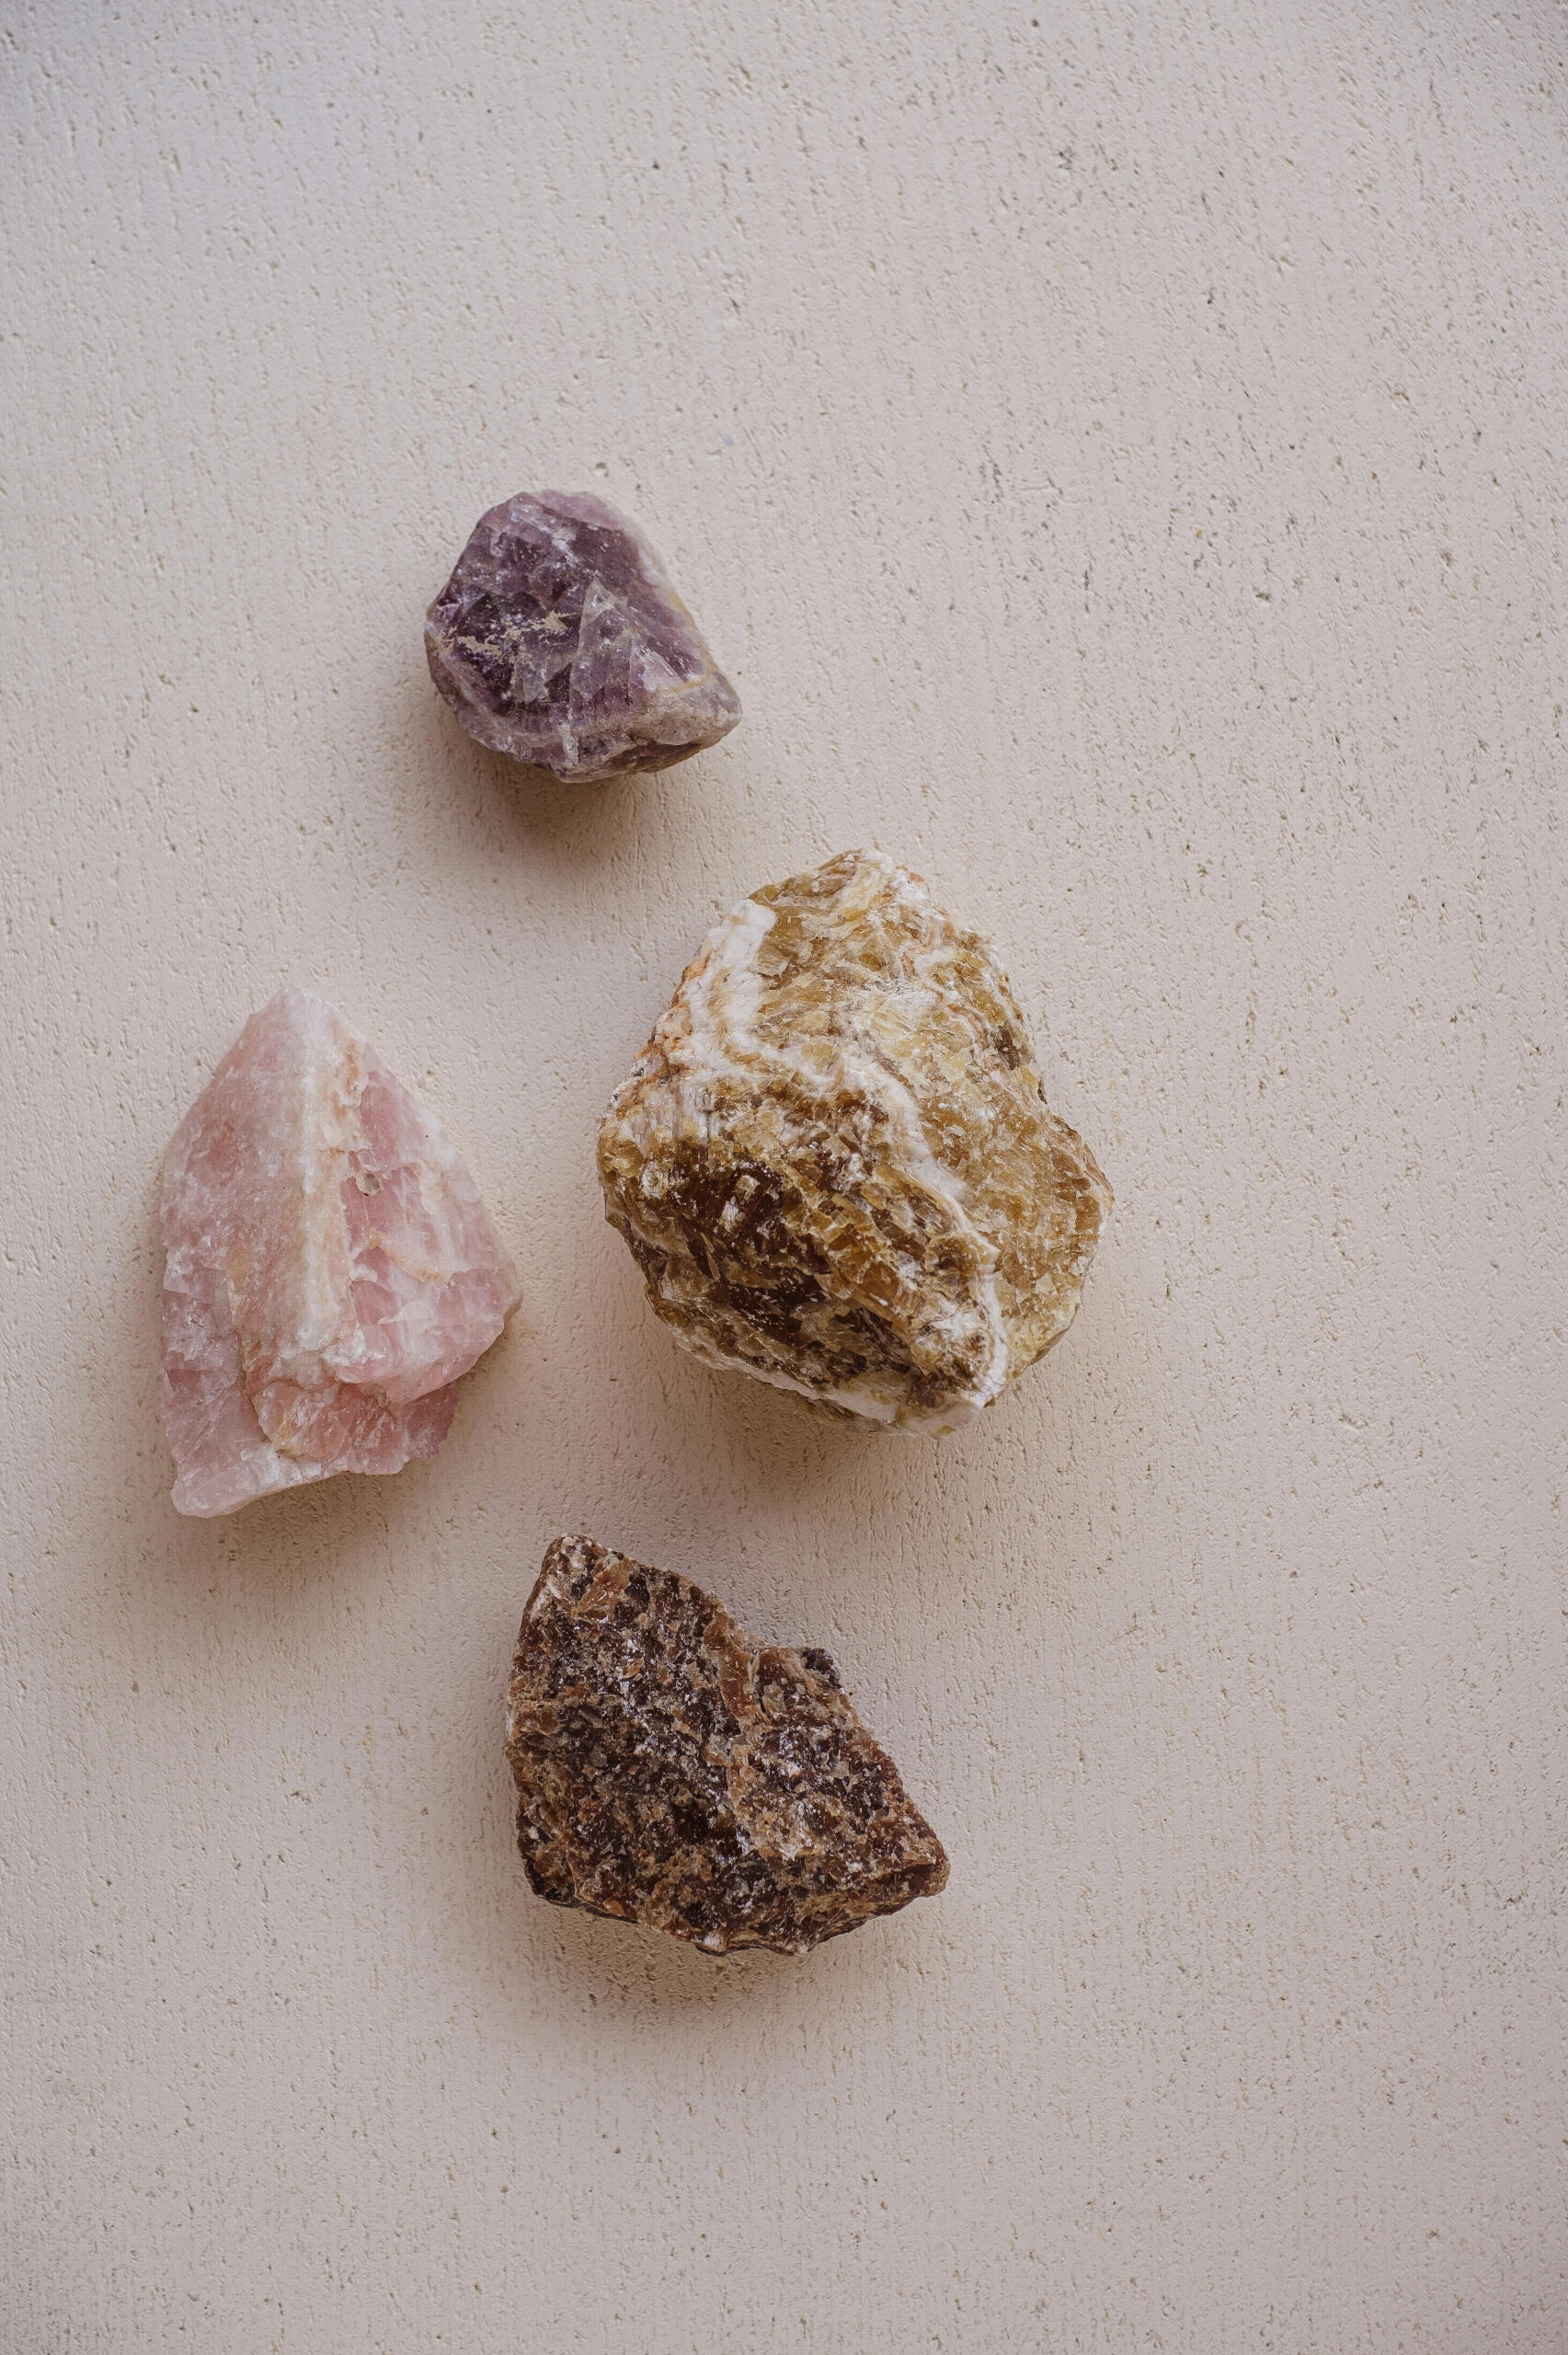 Four raw crystals